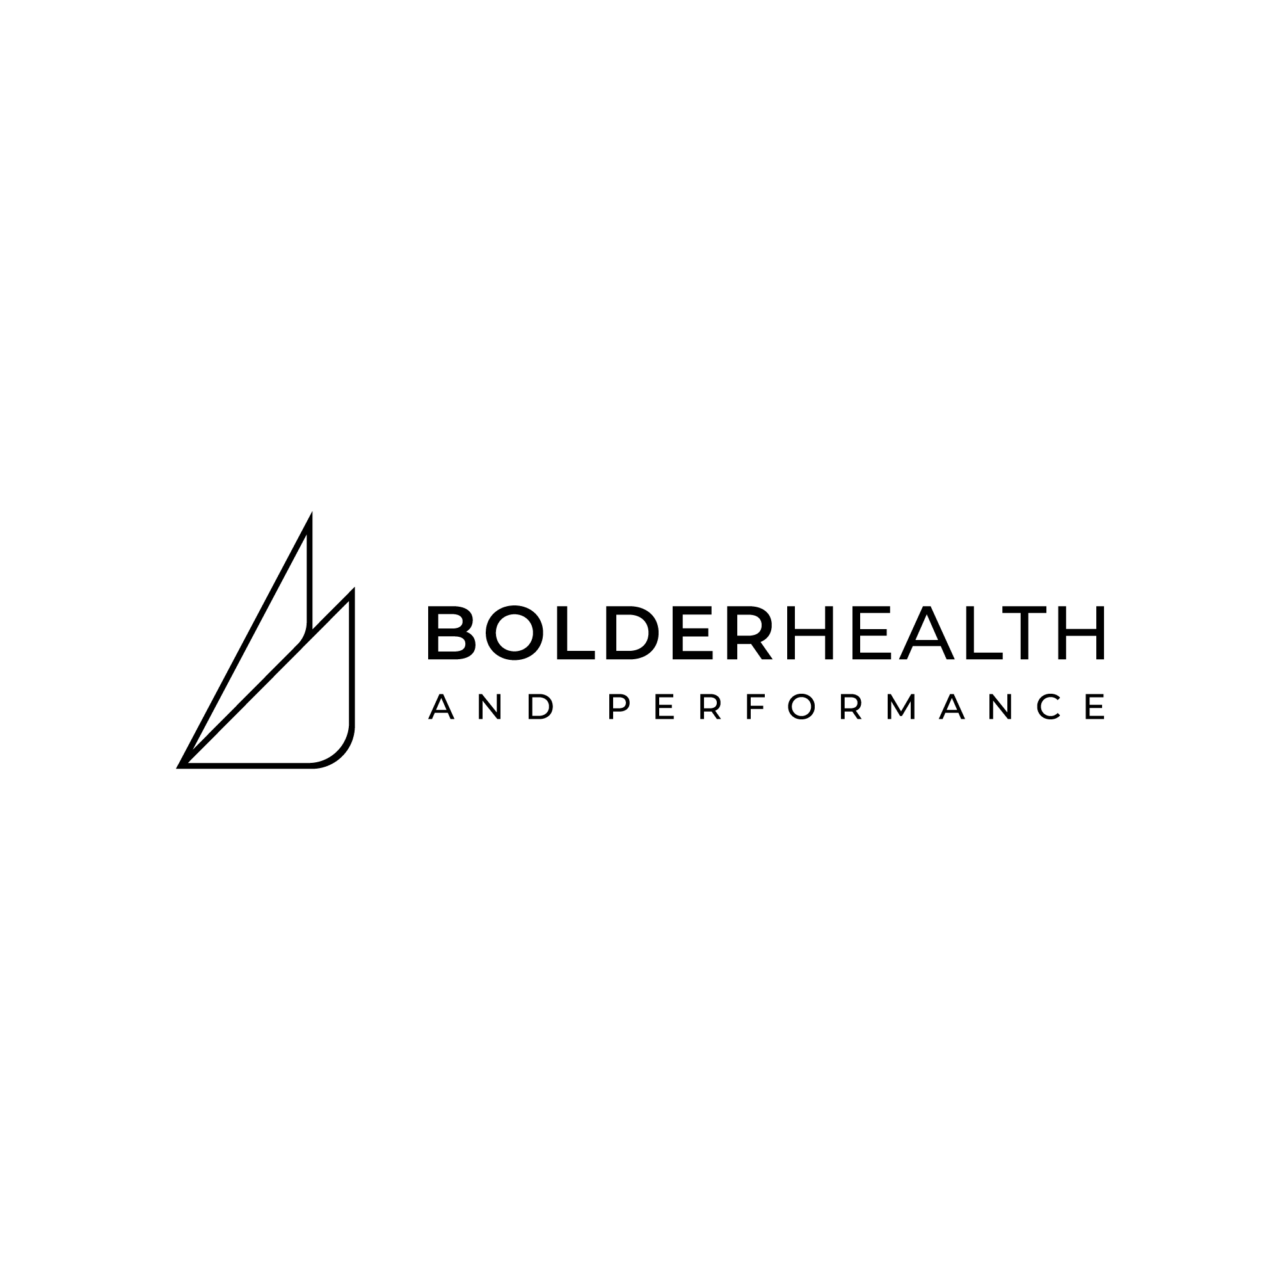 Bolder-Health-and-Performance-logo-1